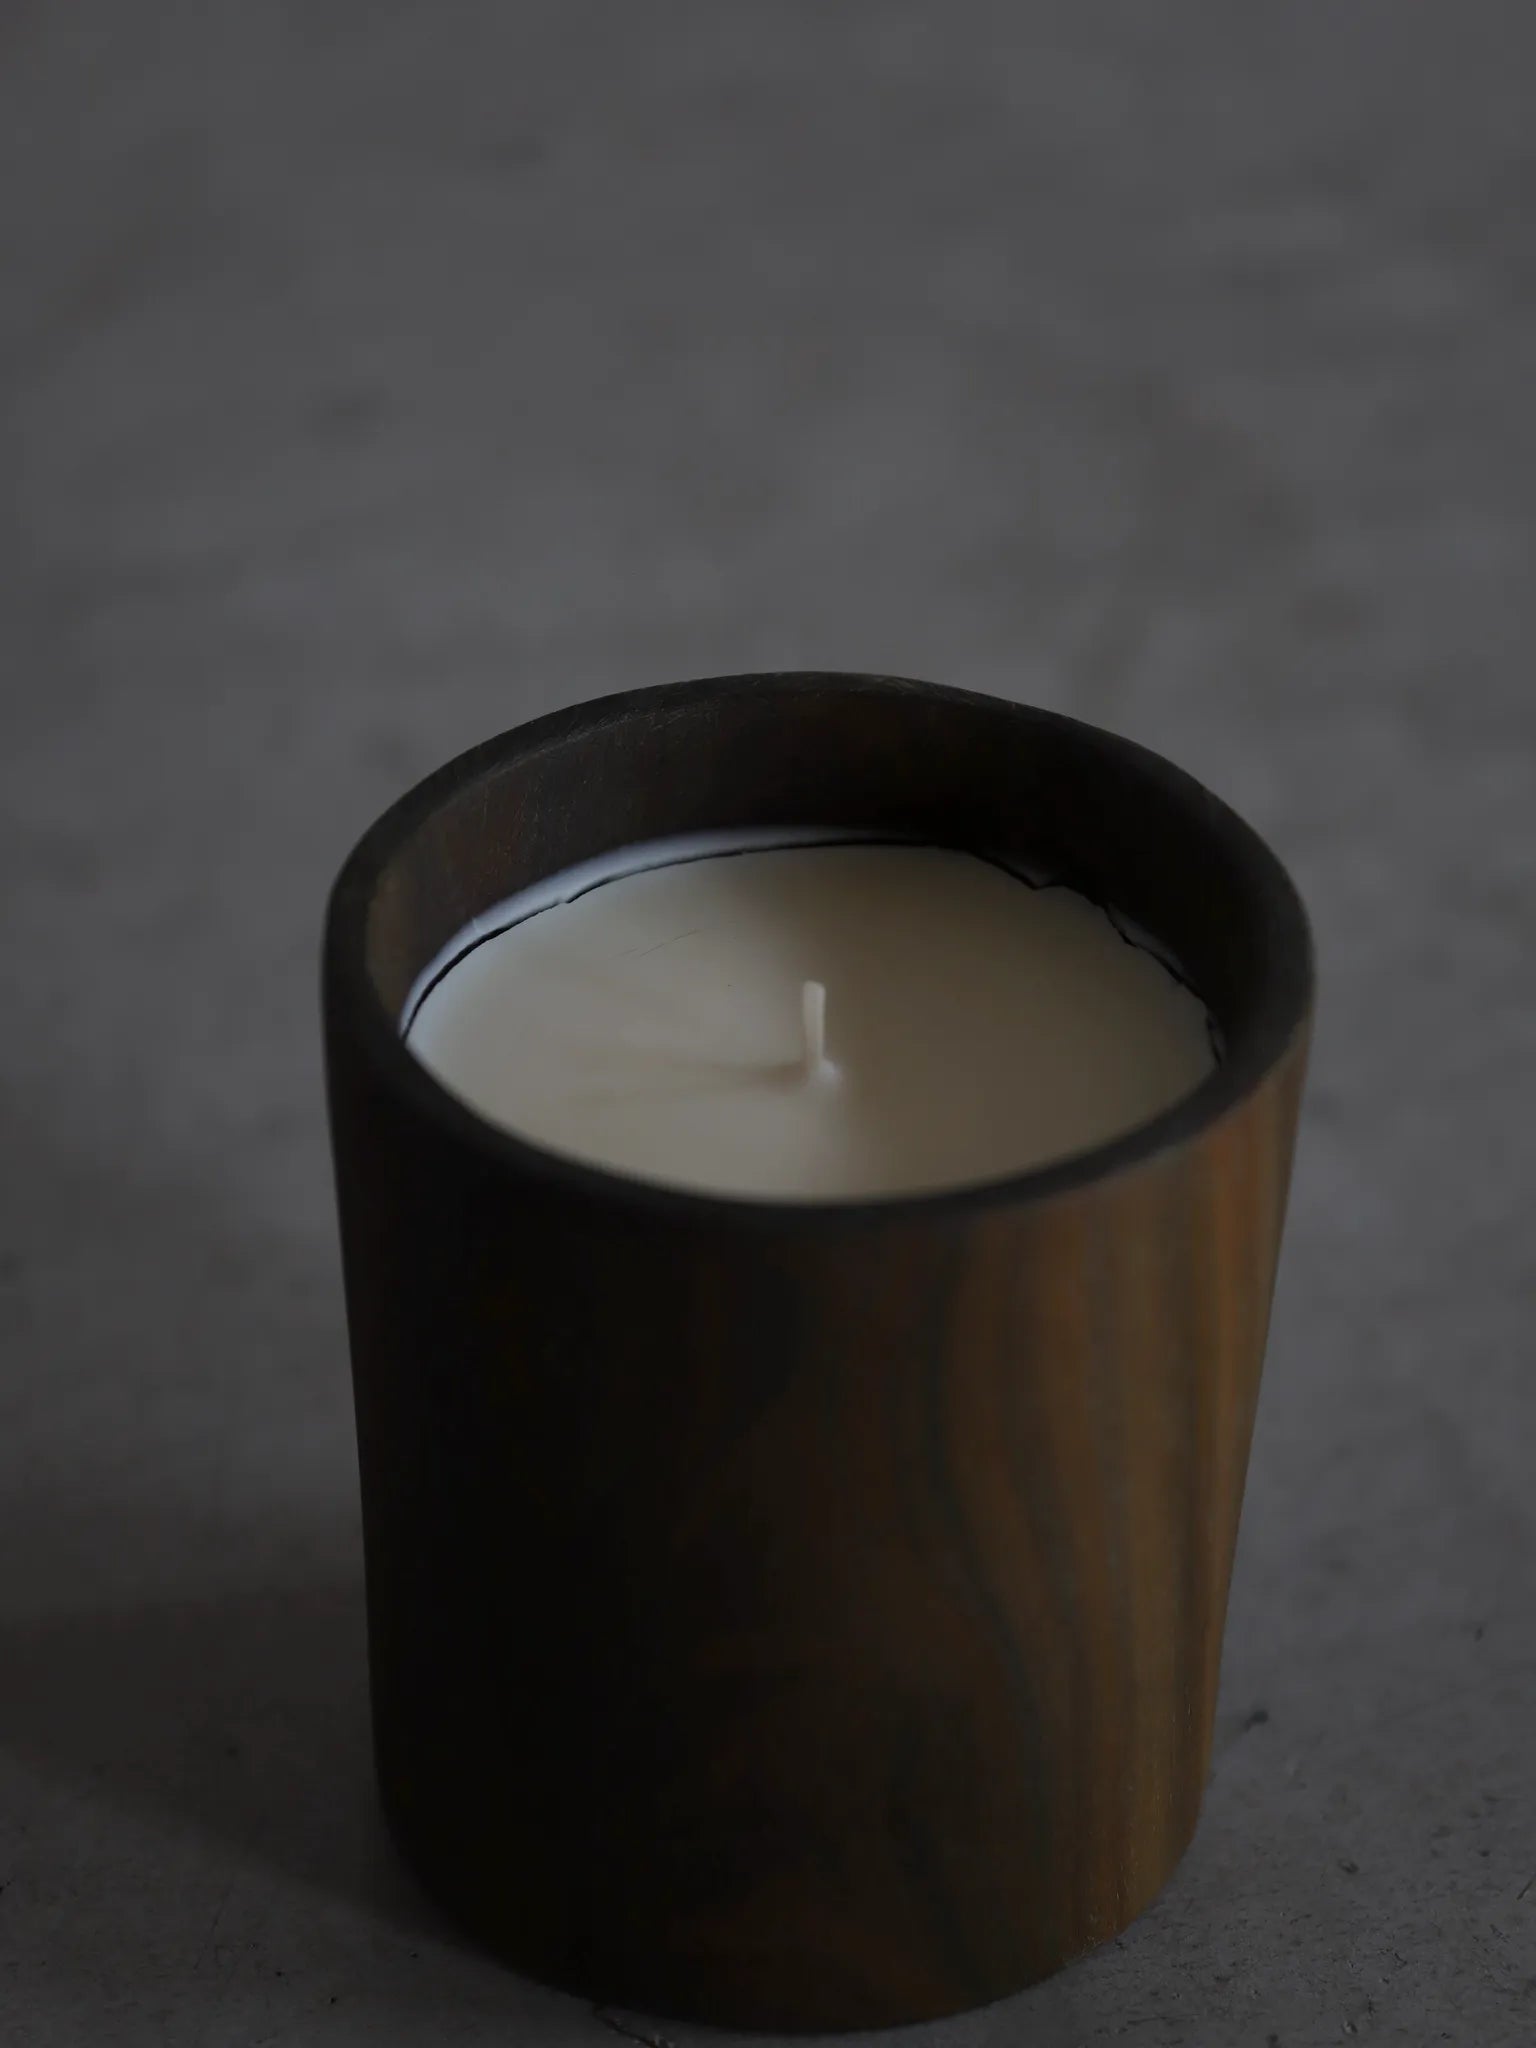 seya-palo-santo-hand-made-candle-off-white-brown-3